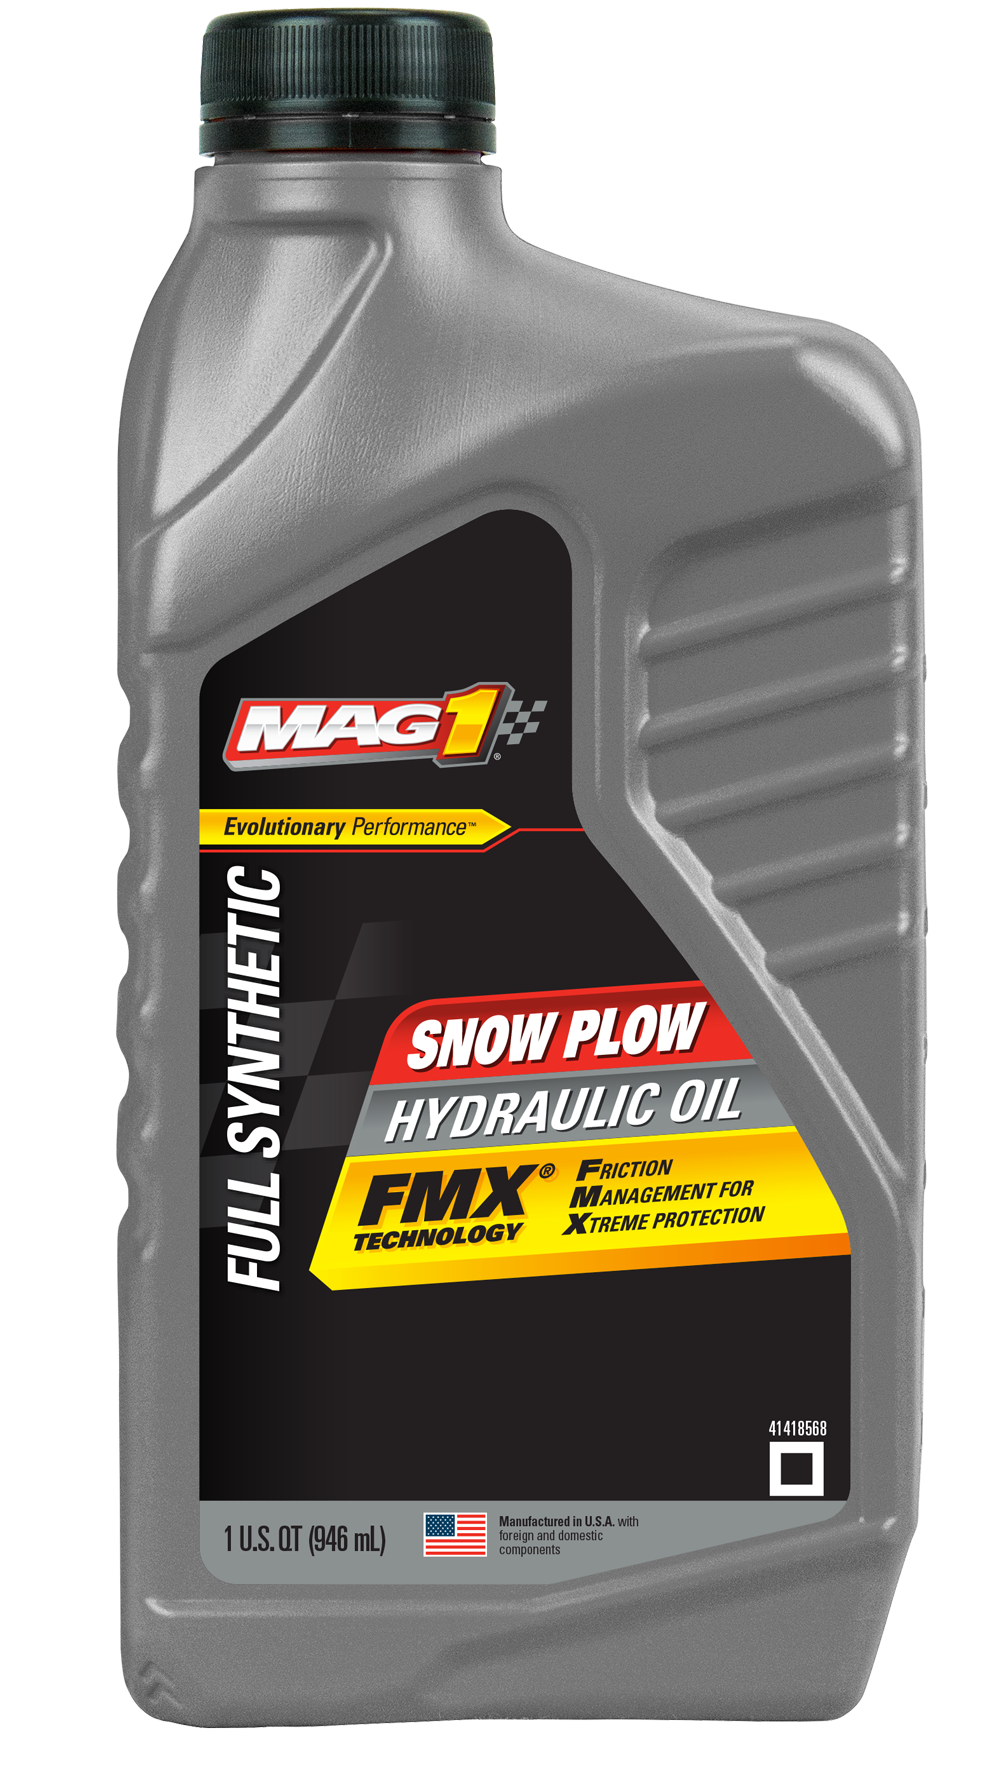 MAG 1® Snow Plow Hydraulic Oil - Mag 1